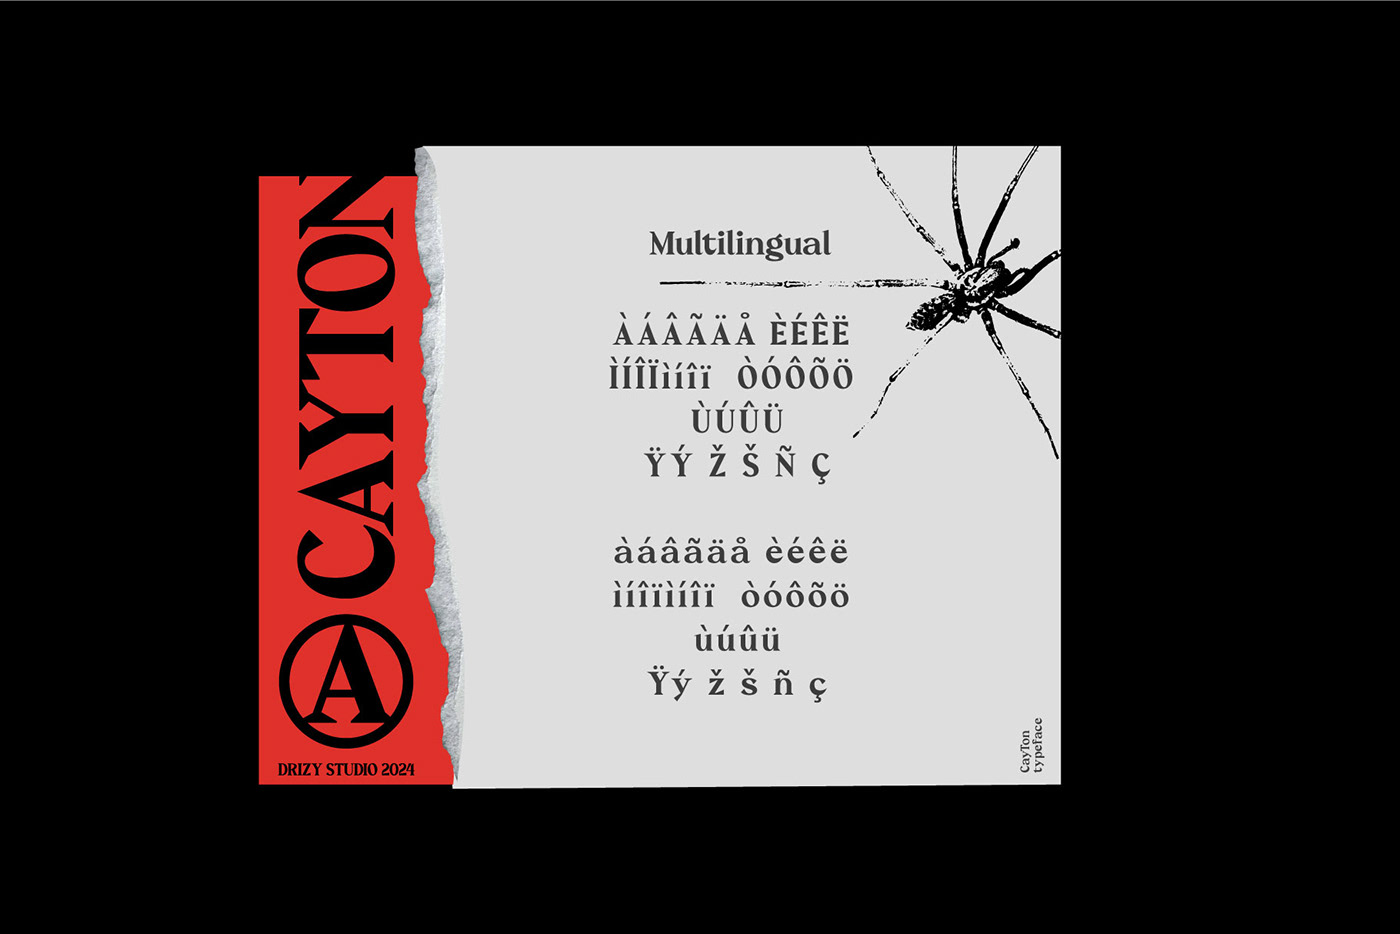 Cayton – Vintage Sharp Serif Font